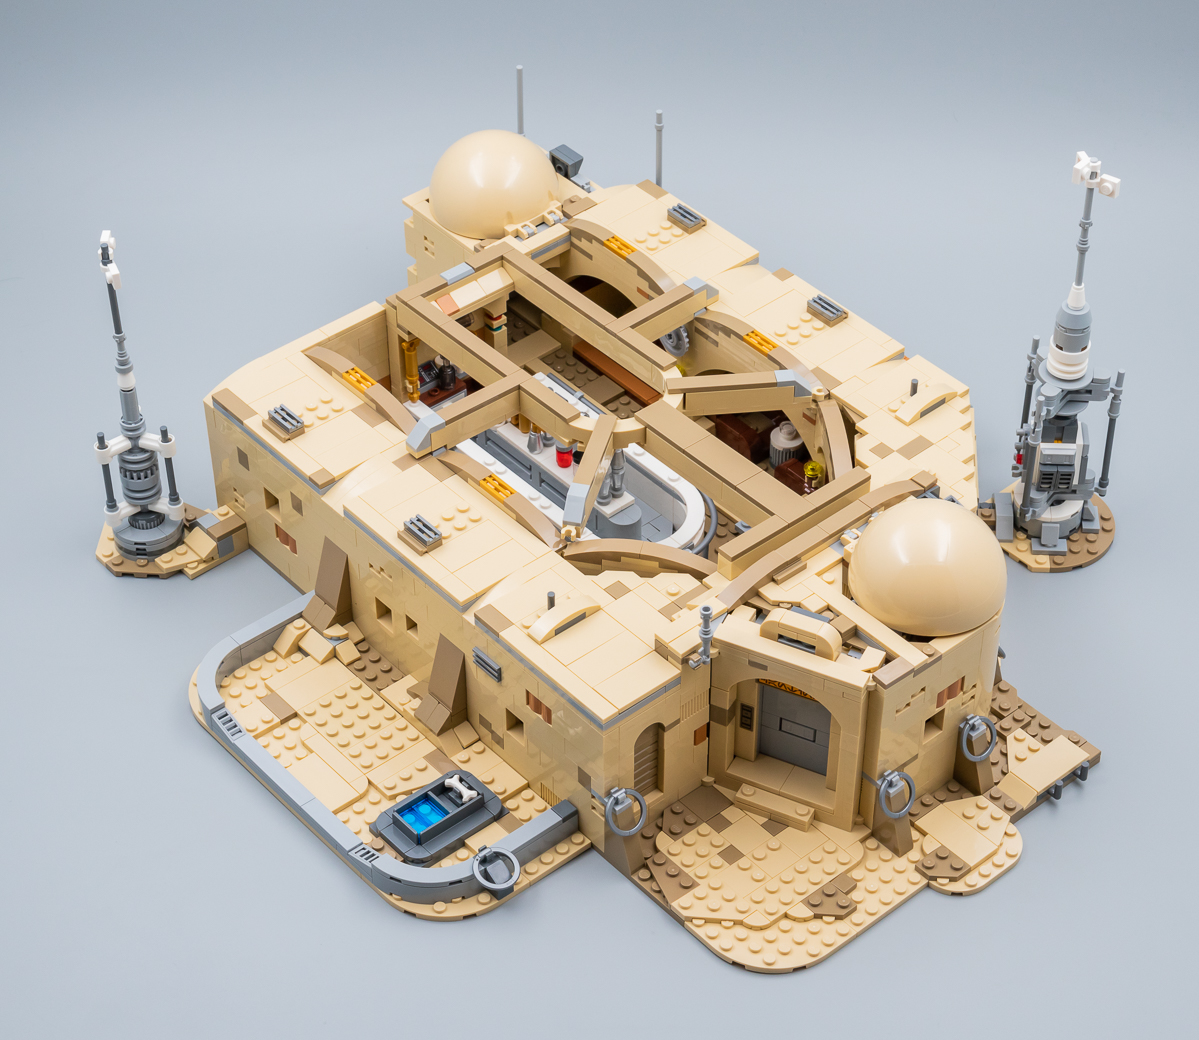  LEGO UK 75205 Mos Eisley Cantina Star Wars Building